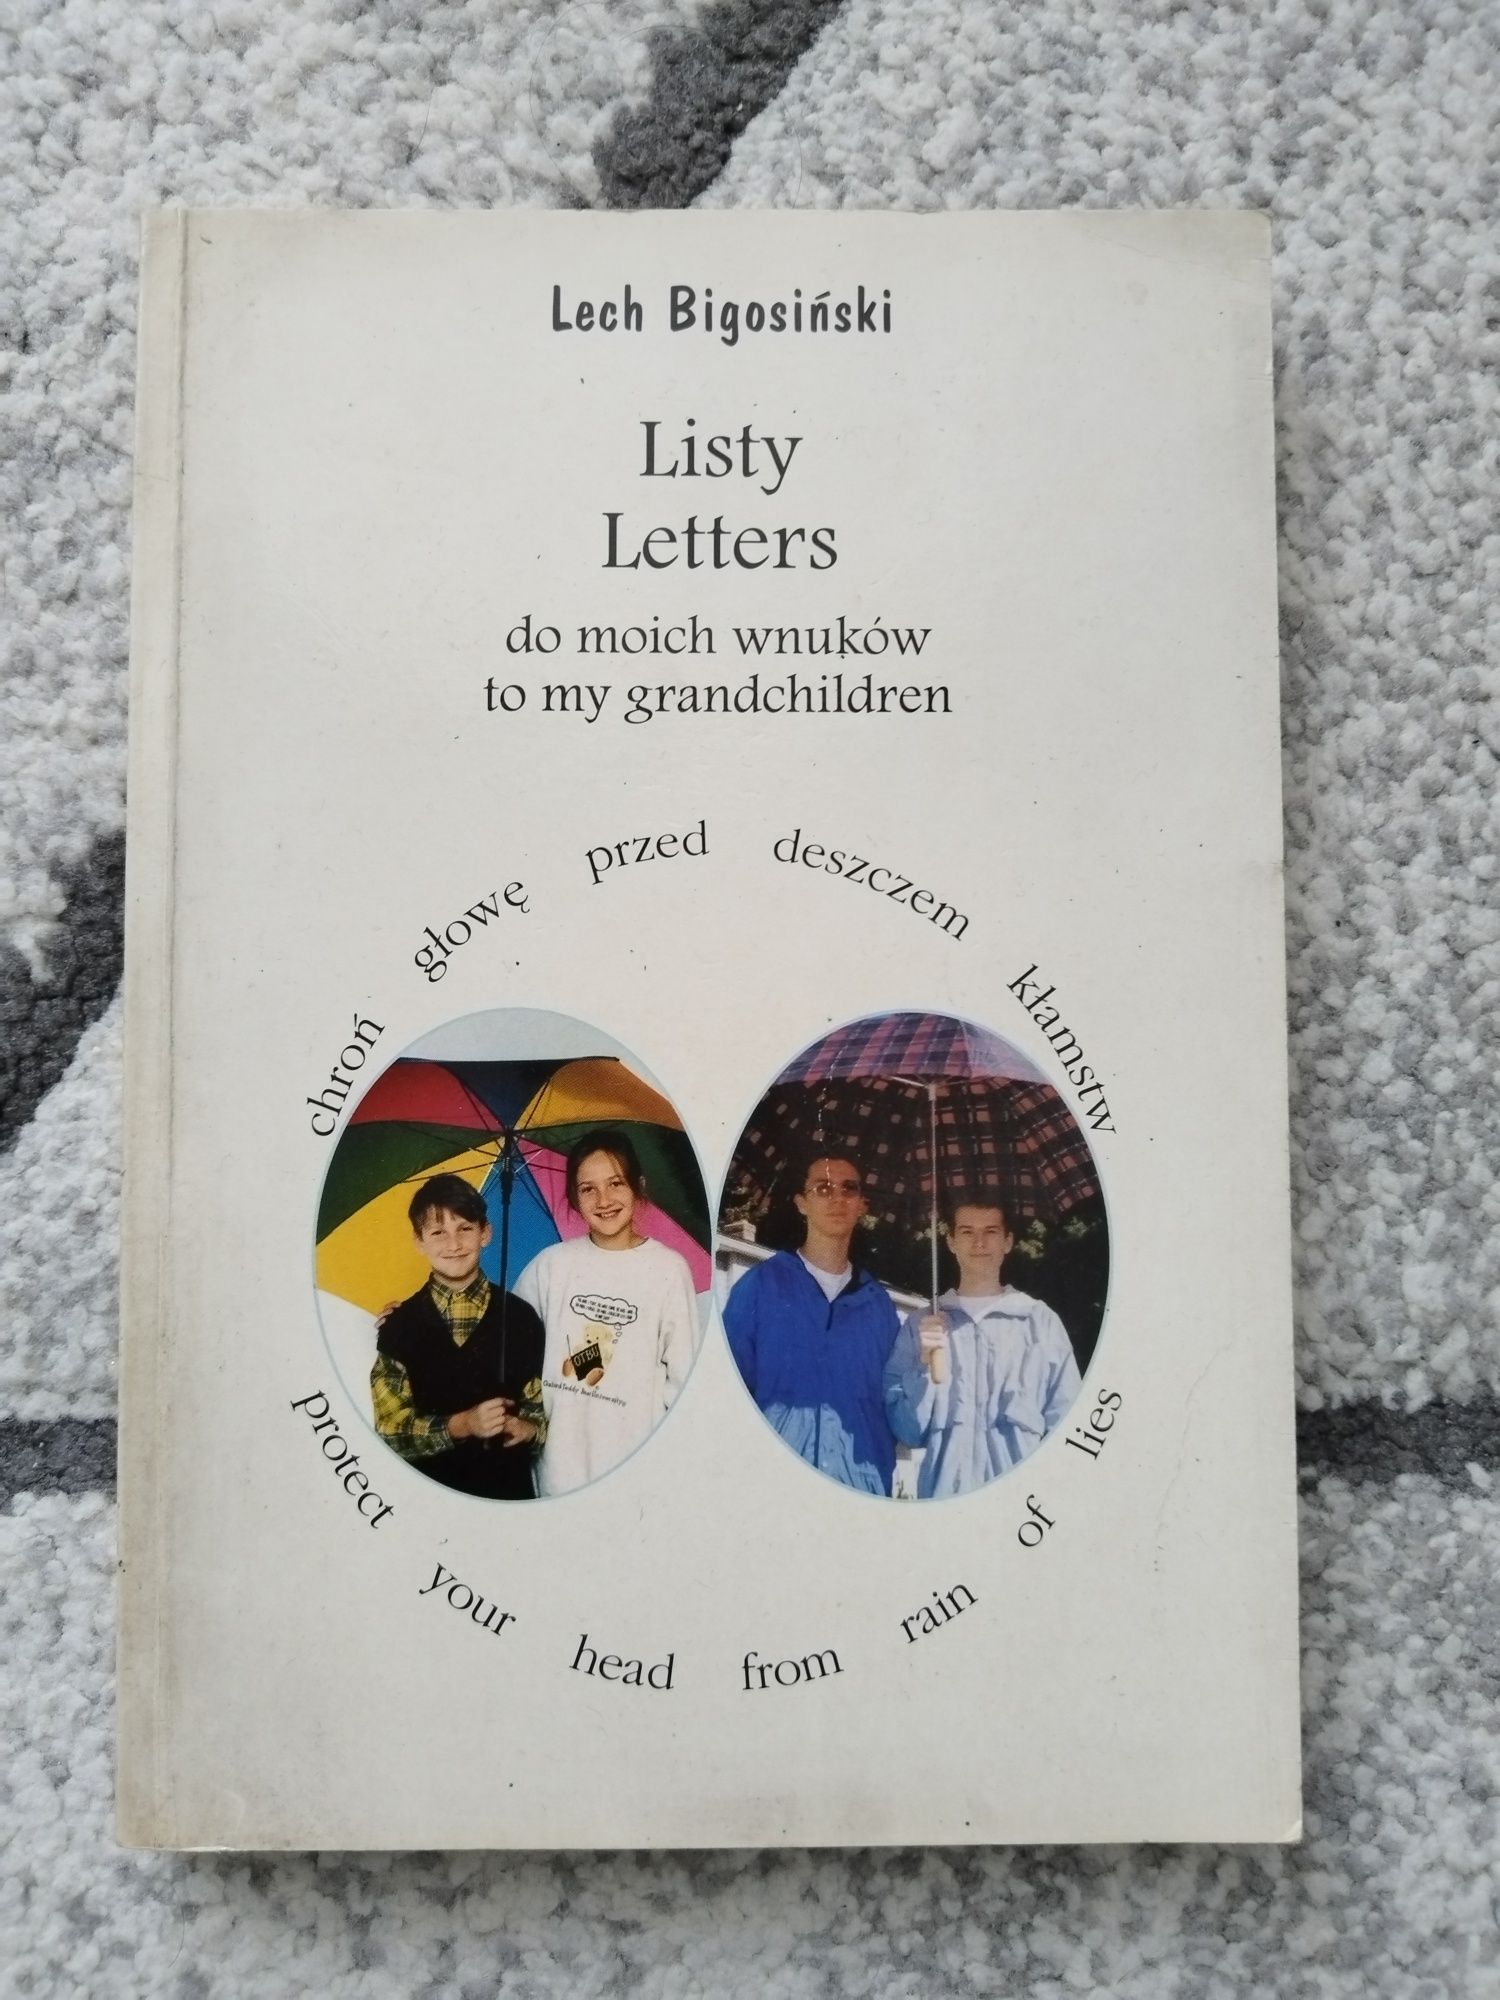 Lech Bigosiński Listy Letters